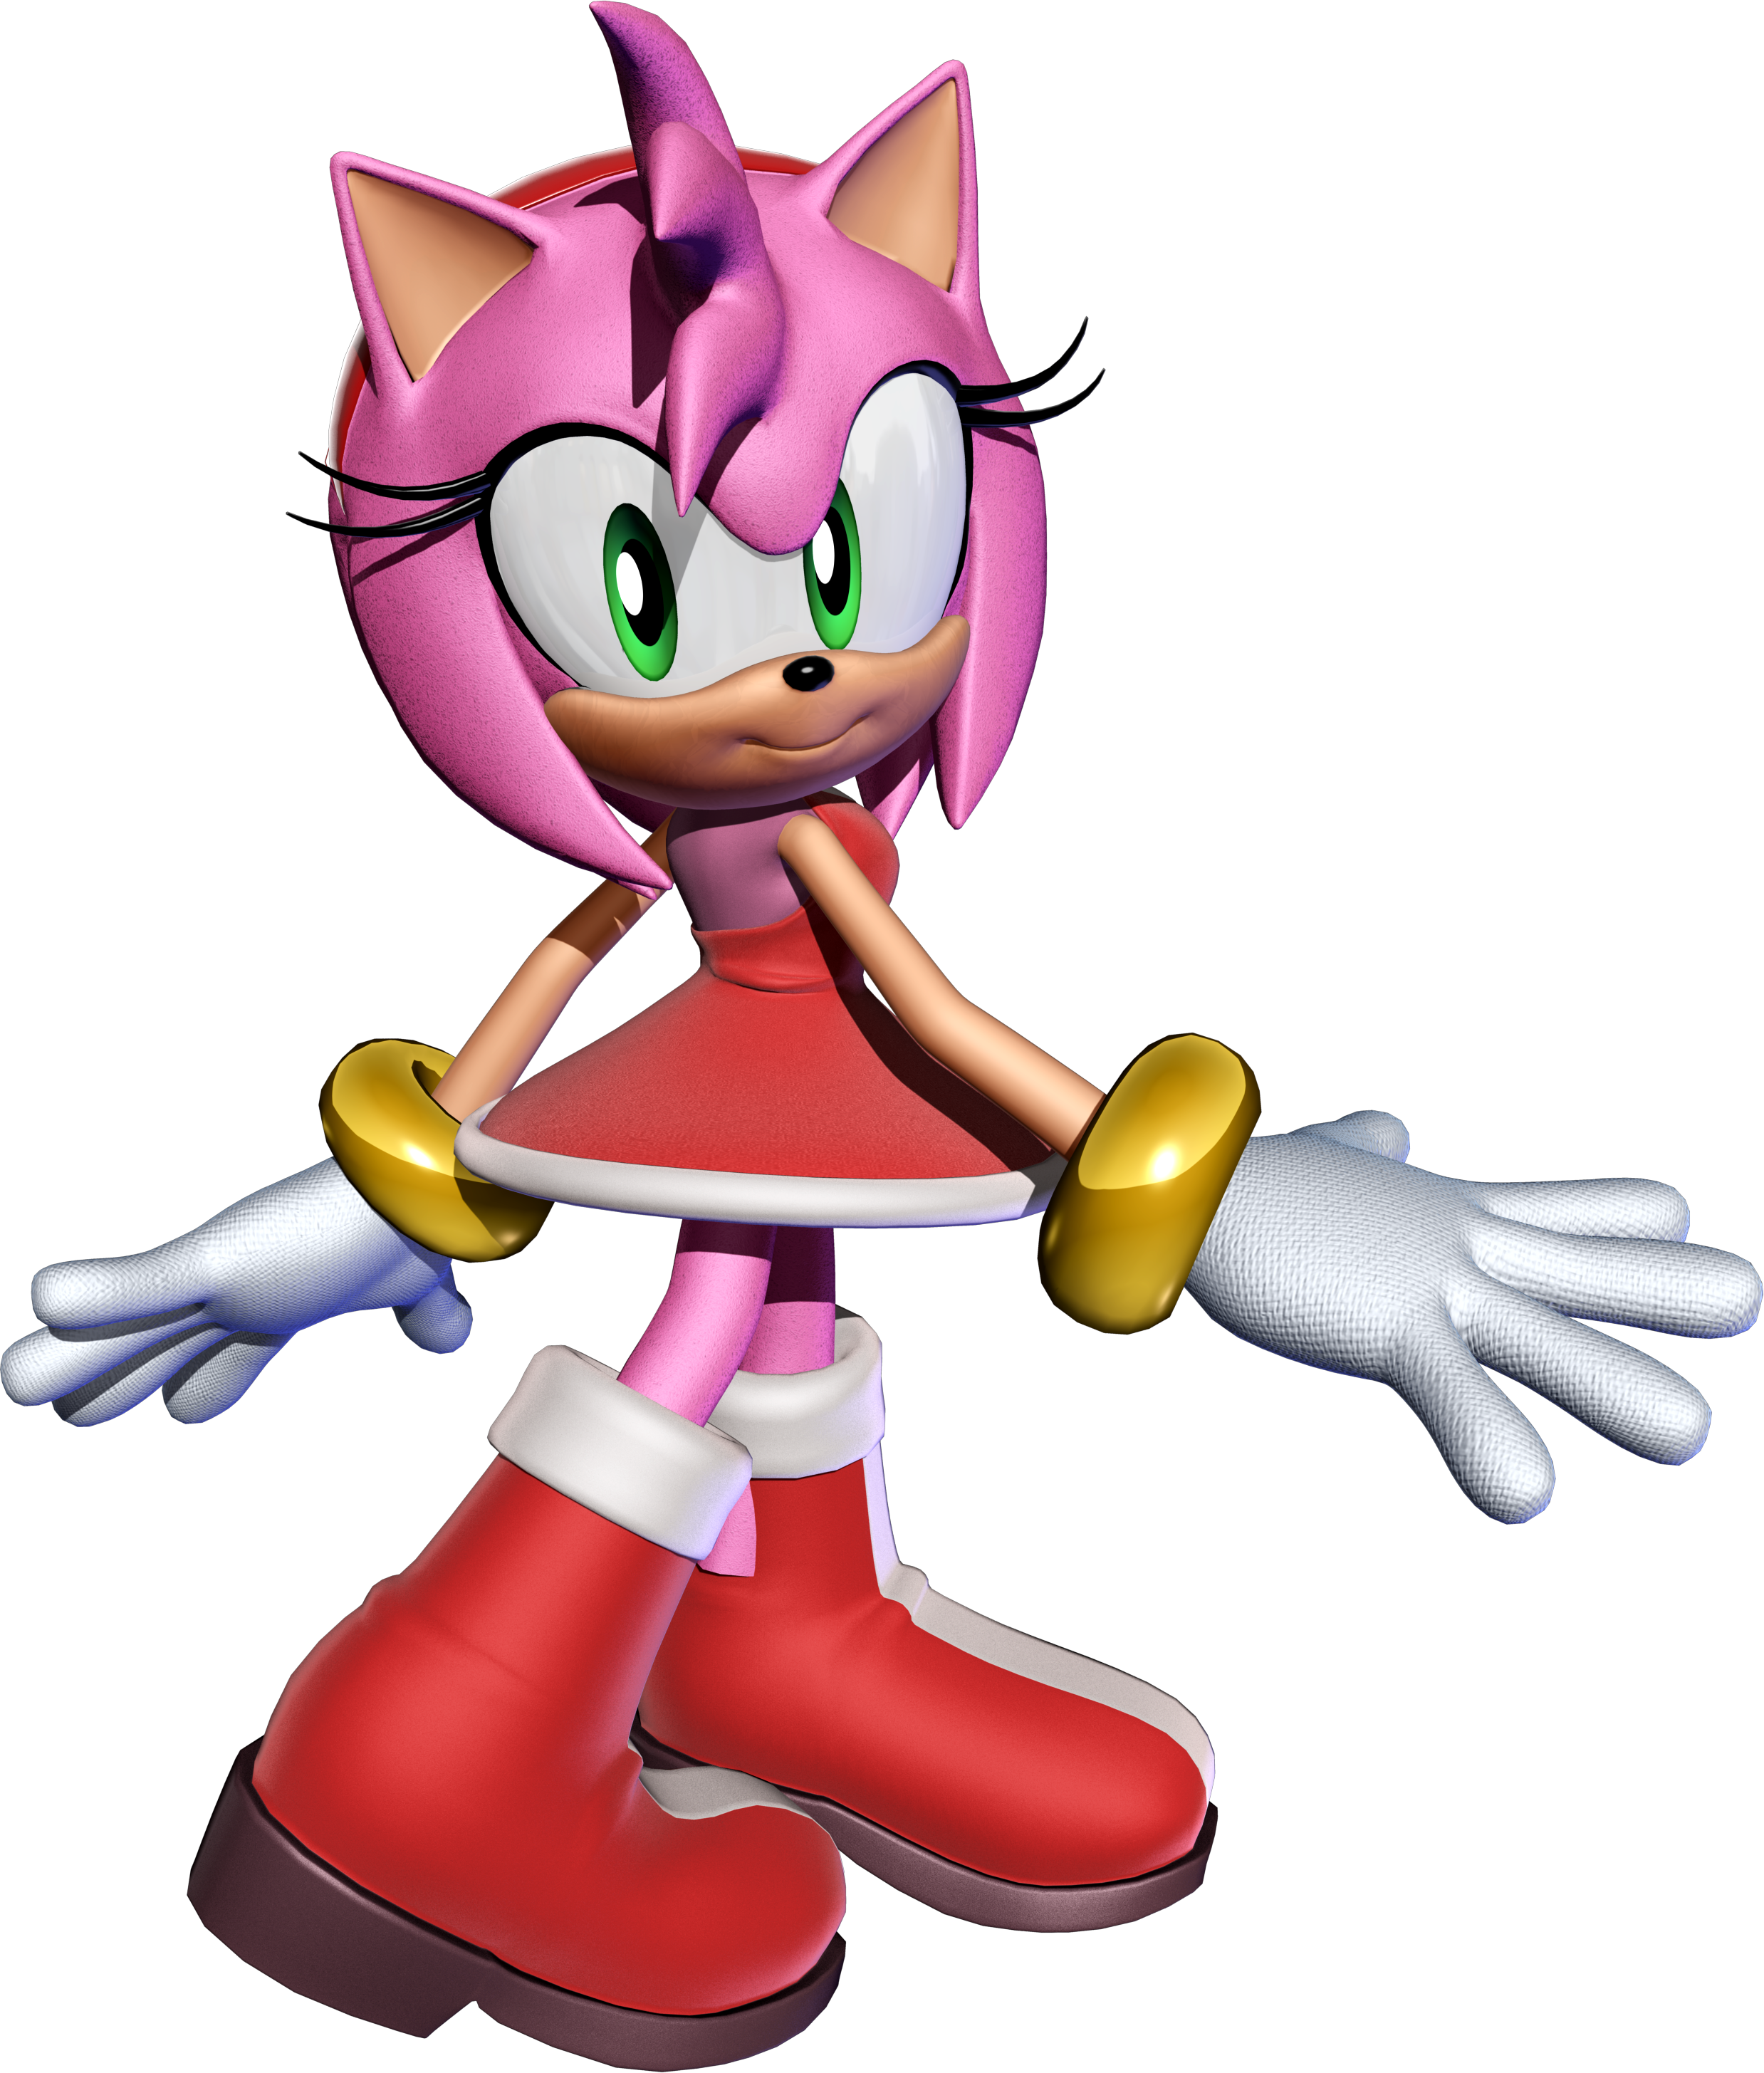 Amy Rose - Amy Rose The Hedgehog (2477x2911)